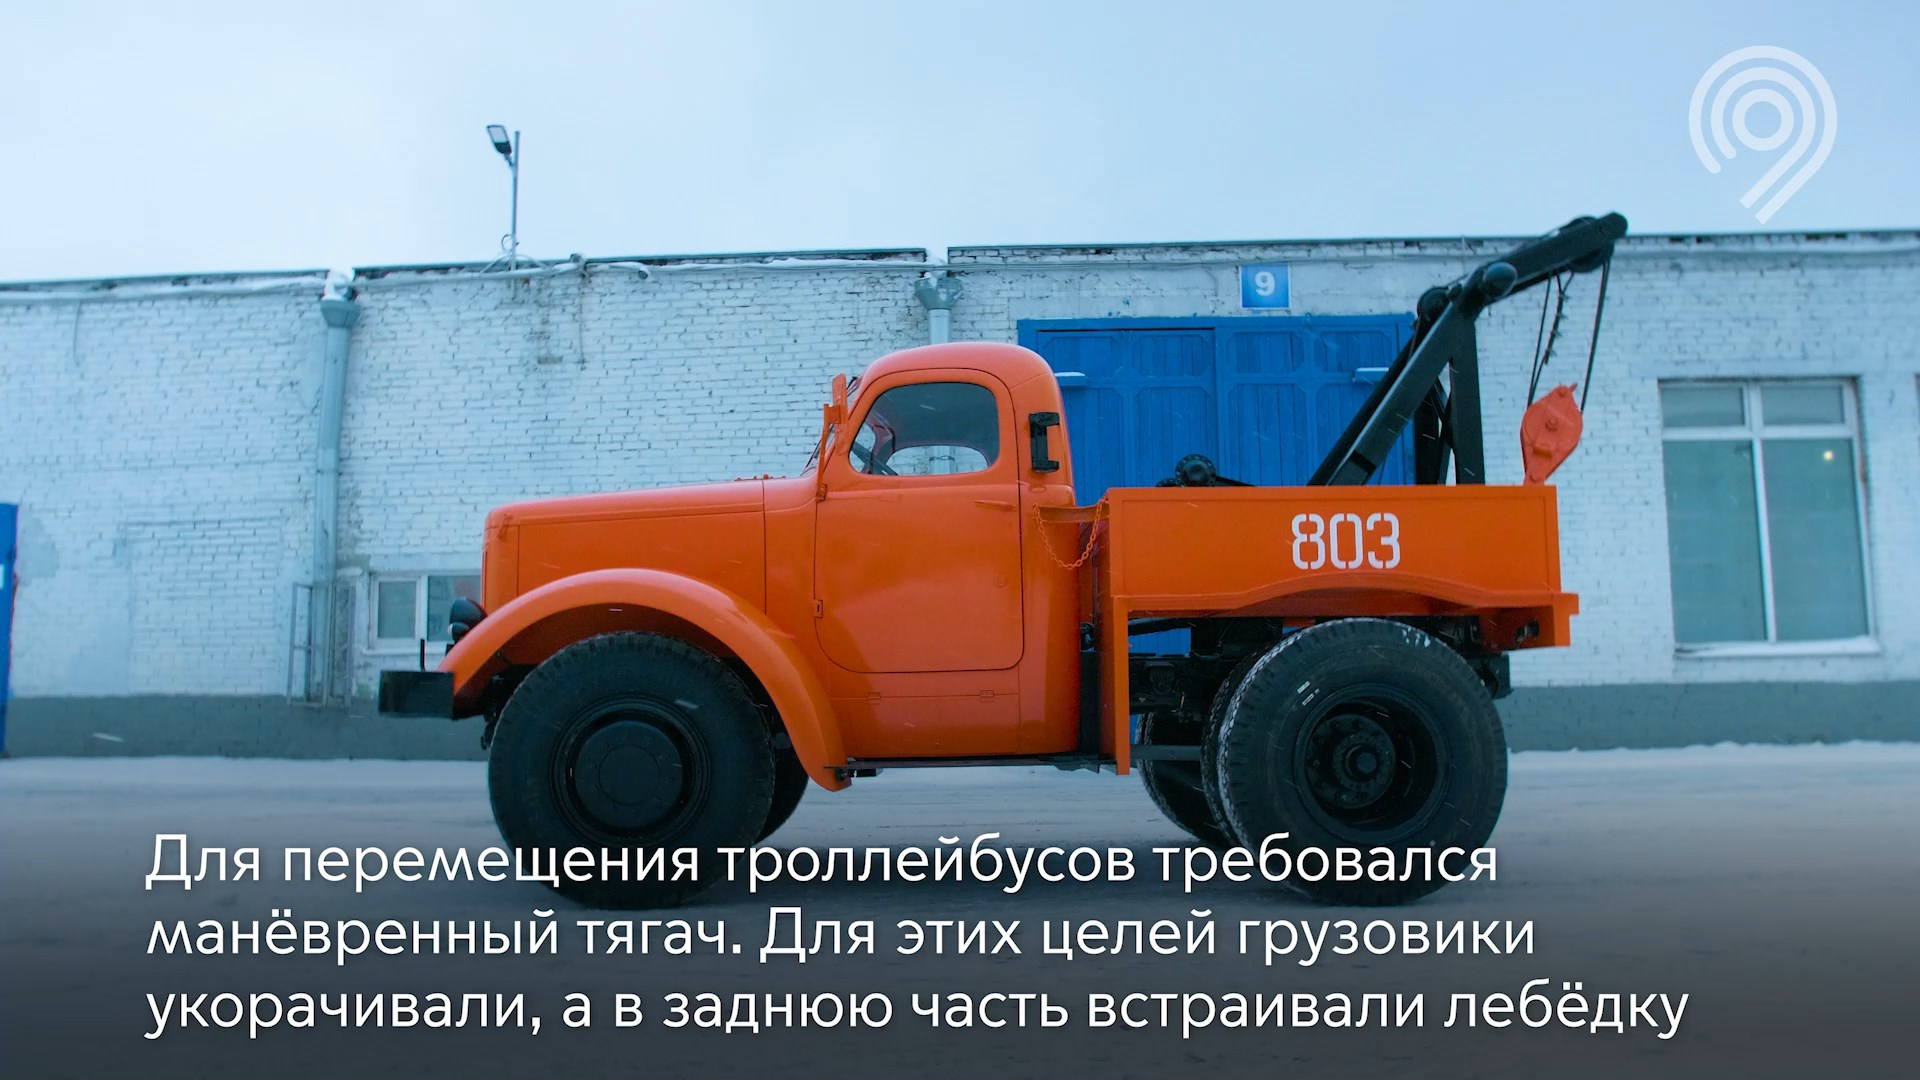 Скриншот видео <a href="https://vk.com/wall-96196967_176500" class="_ io-leave-page" target="_blank">Дептранса Москвы</a>